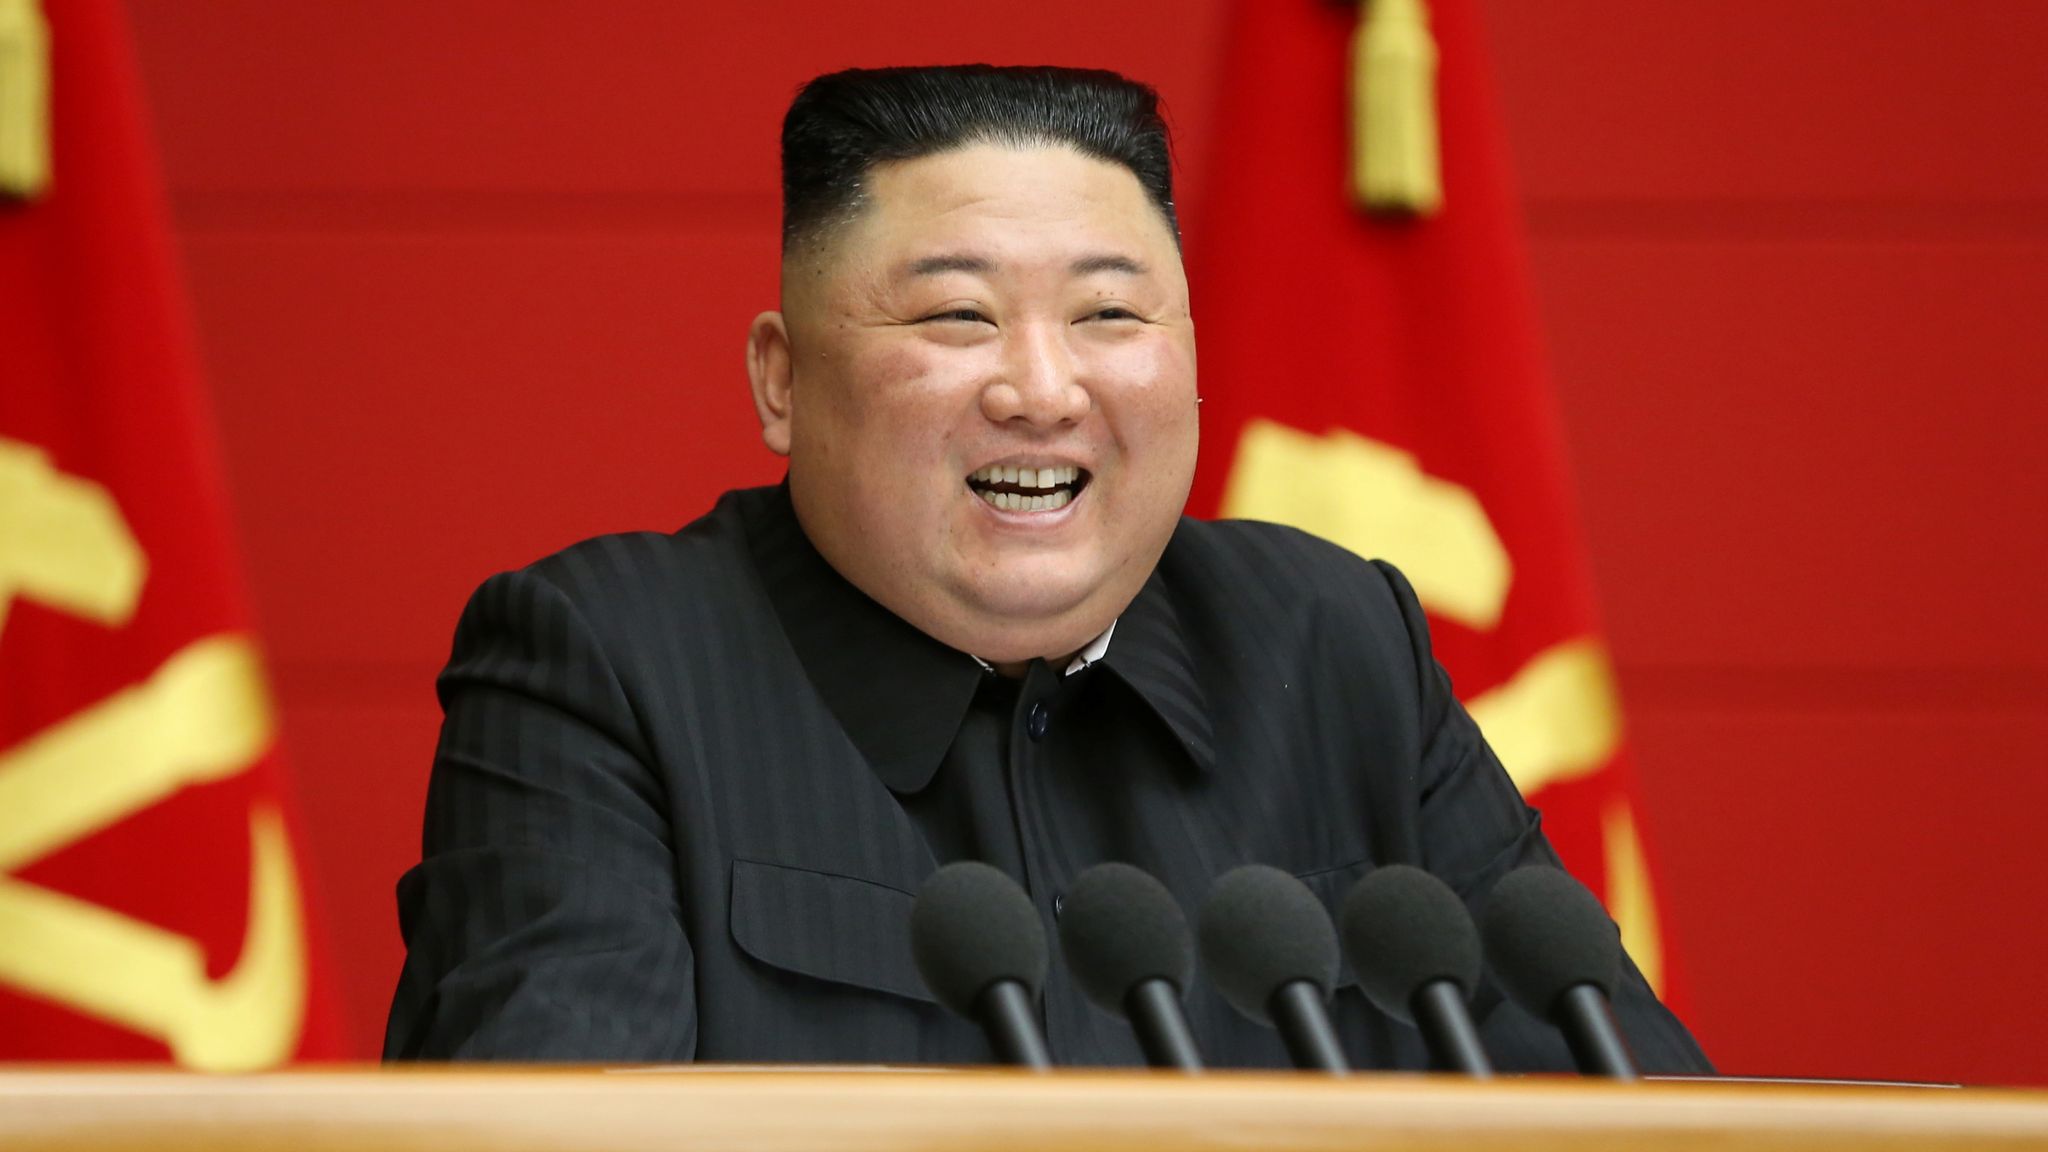 Kim Jong Un: The Enigma Behind the North Korean Leader